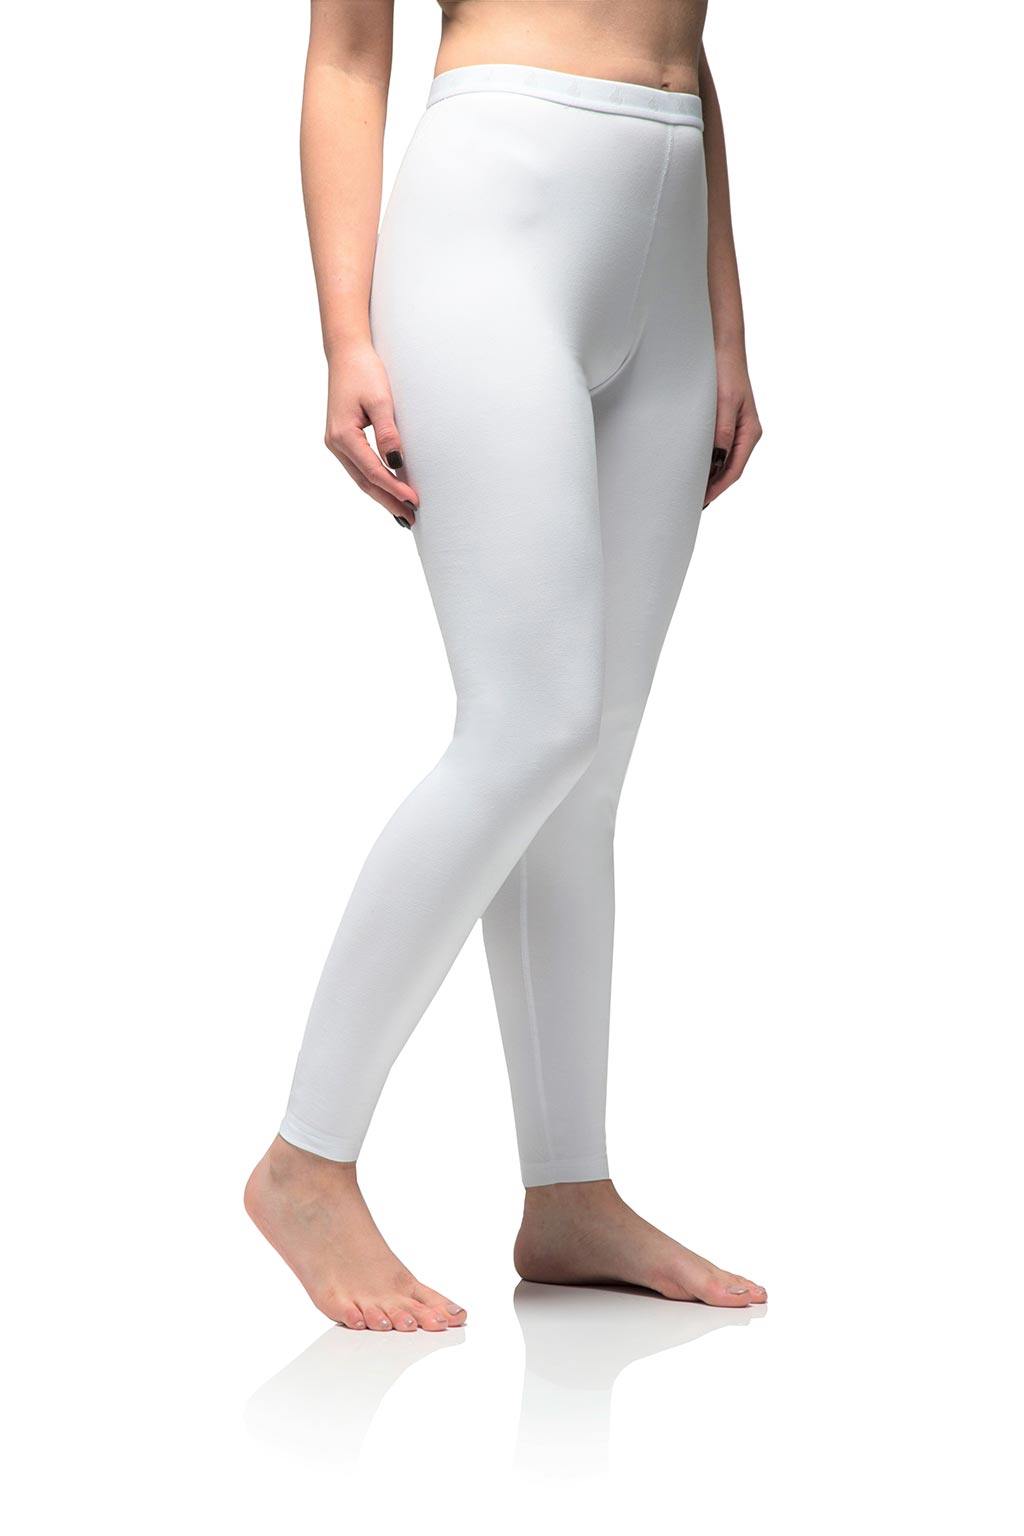 Buy Wearslim Premium Thermal Warmer Bottom Pant for Women Ultra